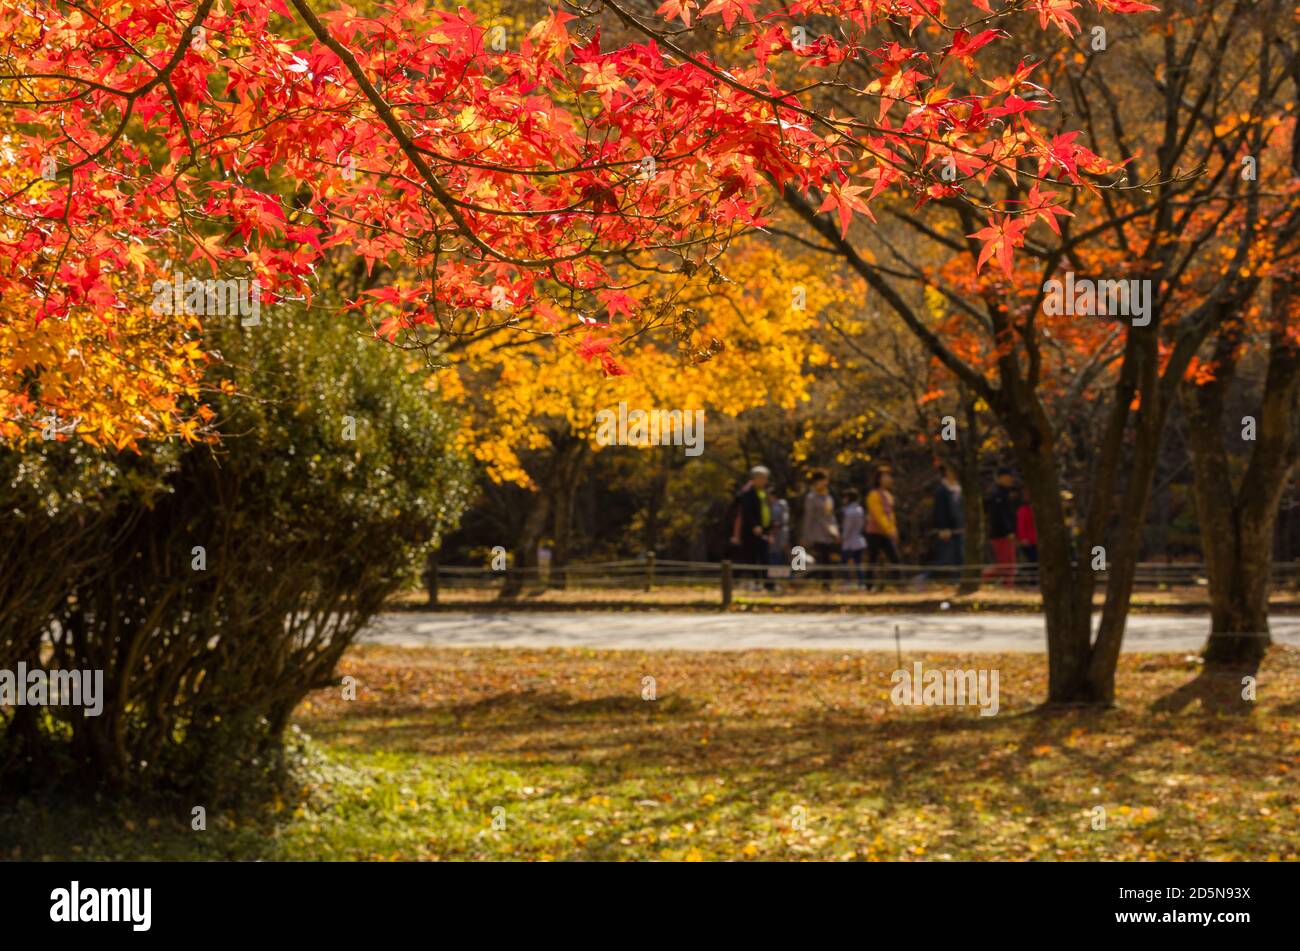 Naejangsan National Park, Jeollabuk-do, South Korea - November 12, 2019: Autumn scenery. Park with colorful maple trees. Stock Photo